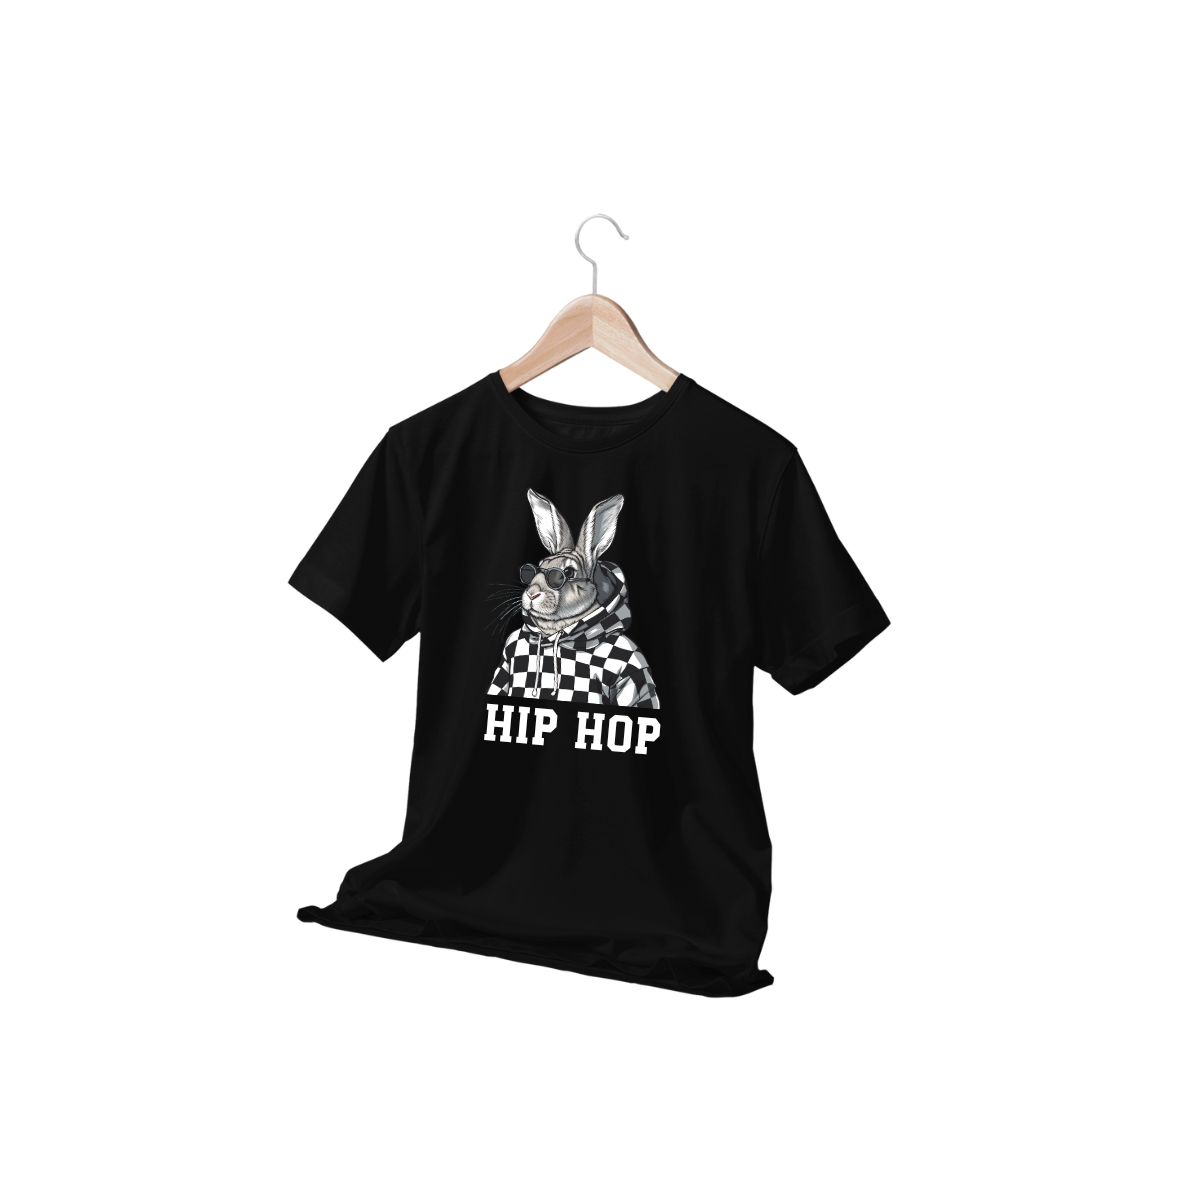 Kids Hip Hop T-Shirt - Fun Bunny Graphic Tee, 100% Cotton Children's Top, Comfy Unisex Kids Clothing, Casual Shirt, Easter t-shirt